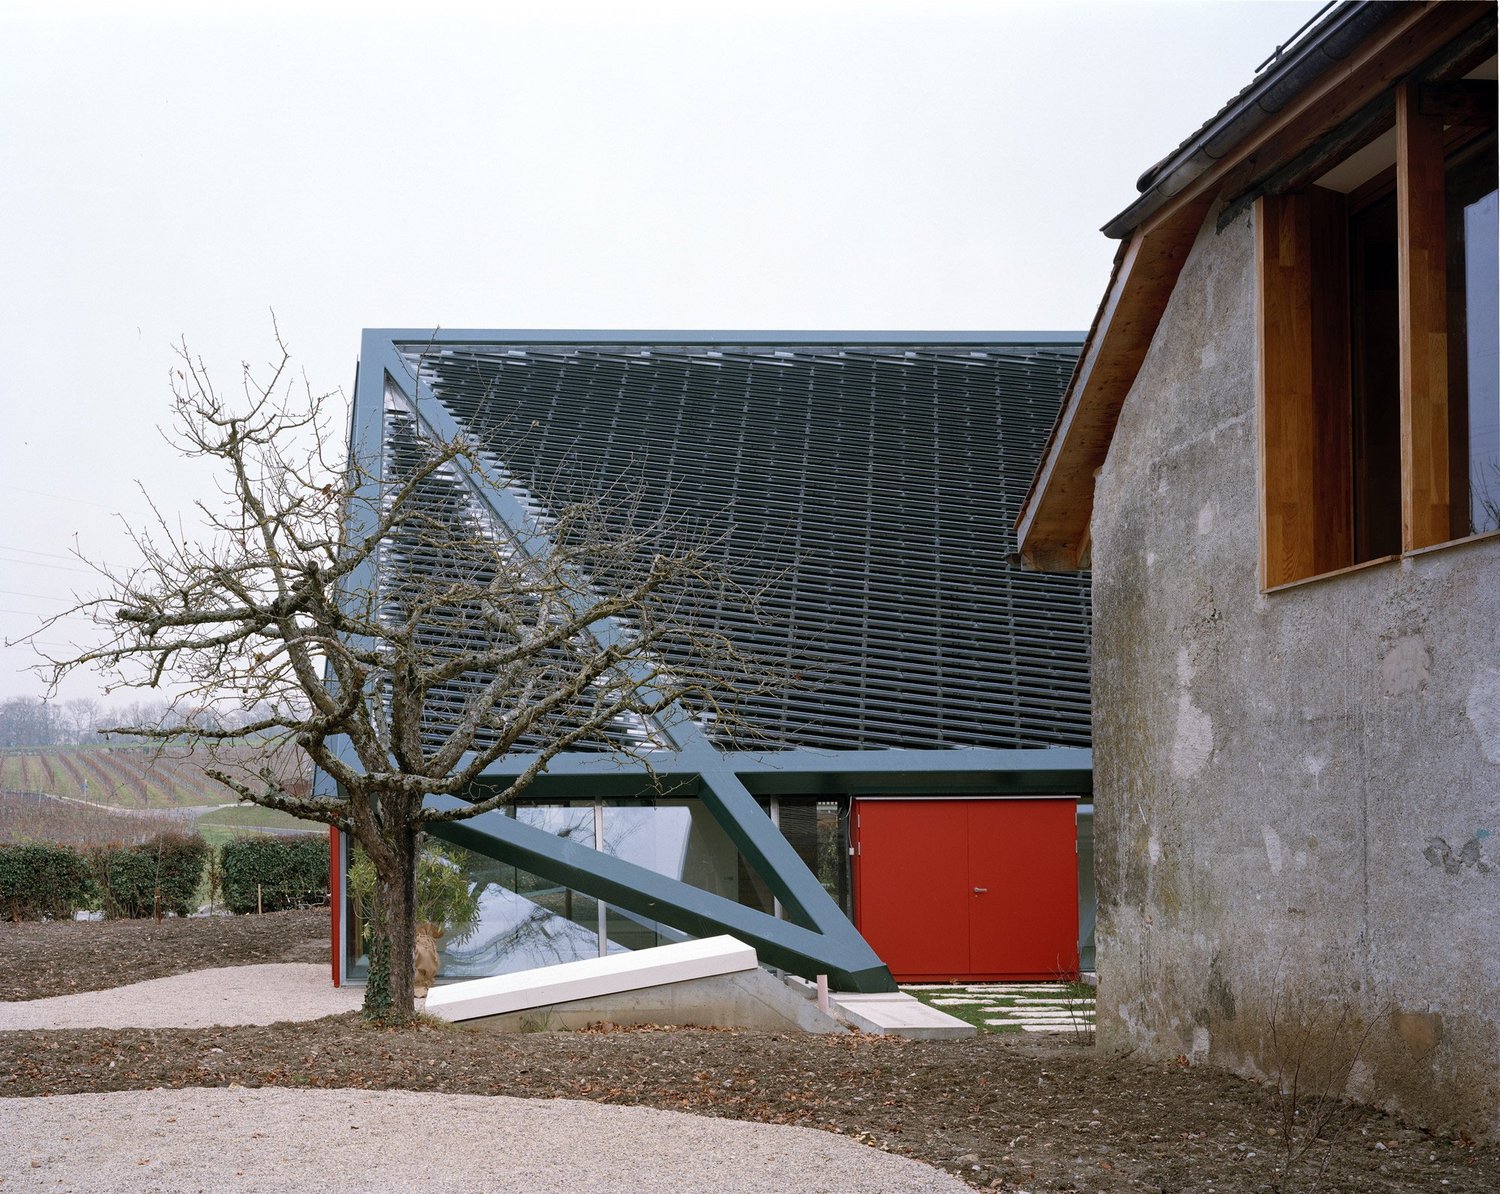 2 Houses in Chigny | © Joël Tettamanti